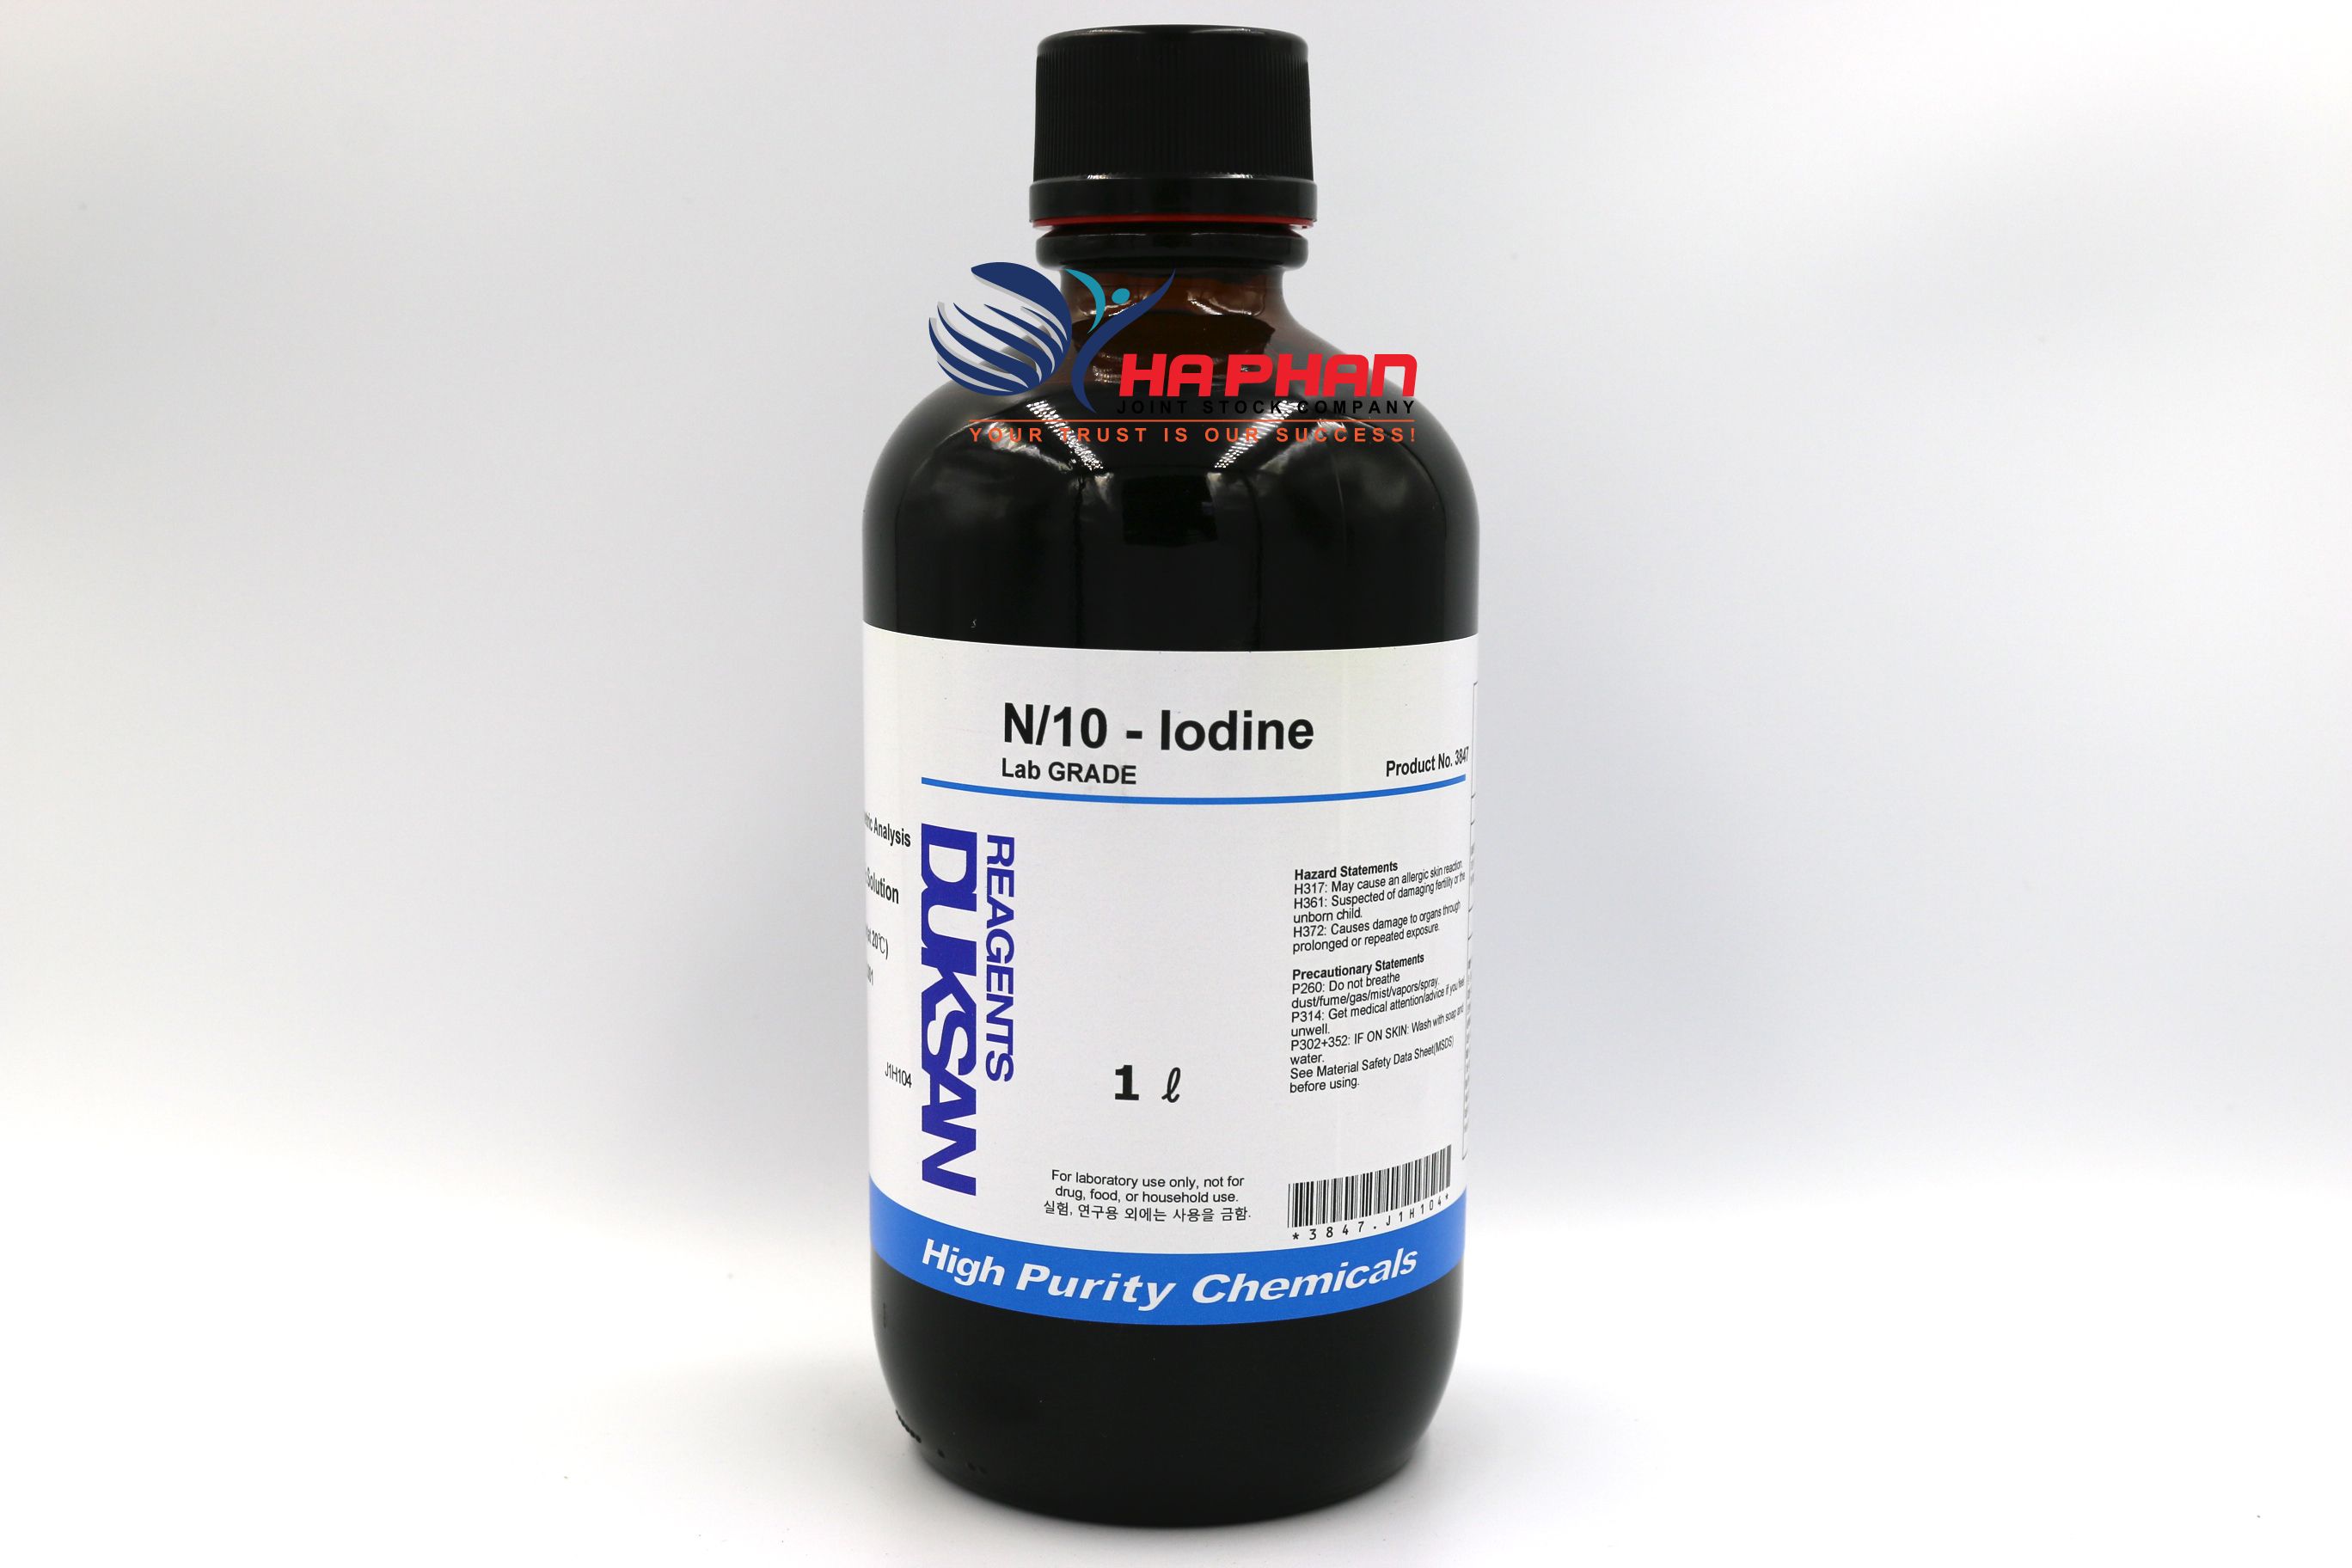 N/10 - Iodine